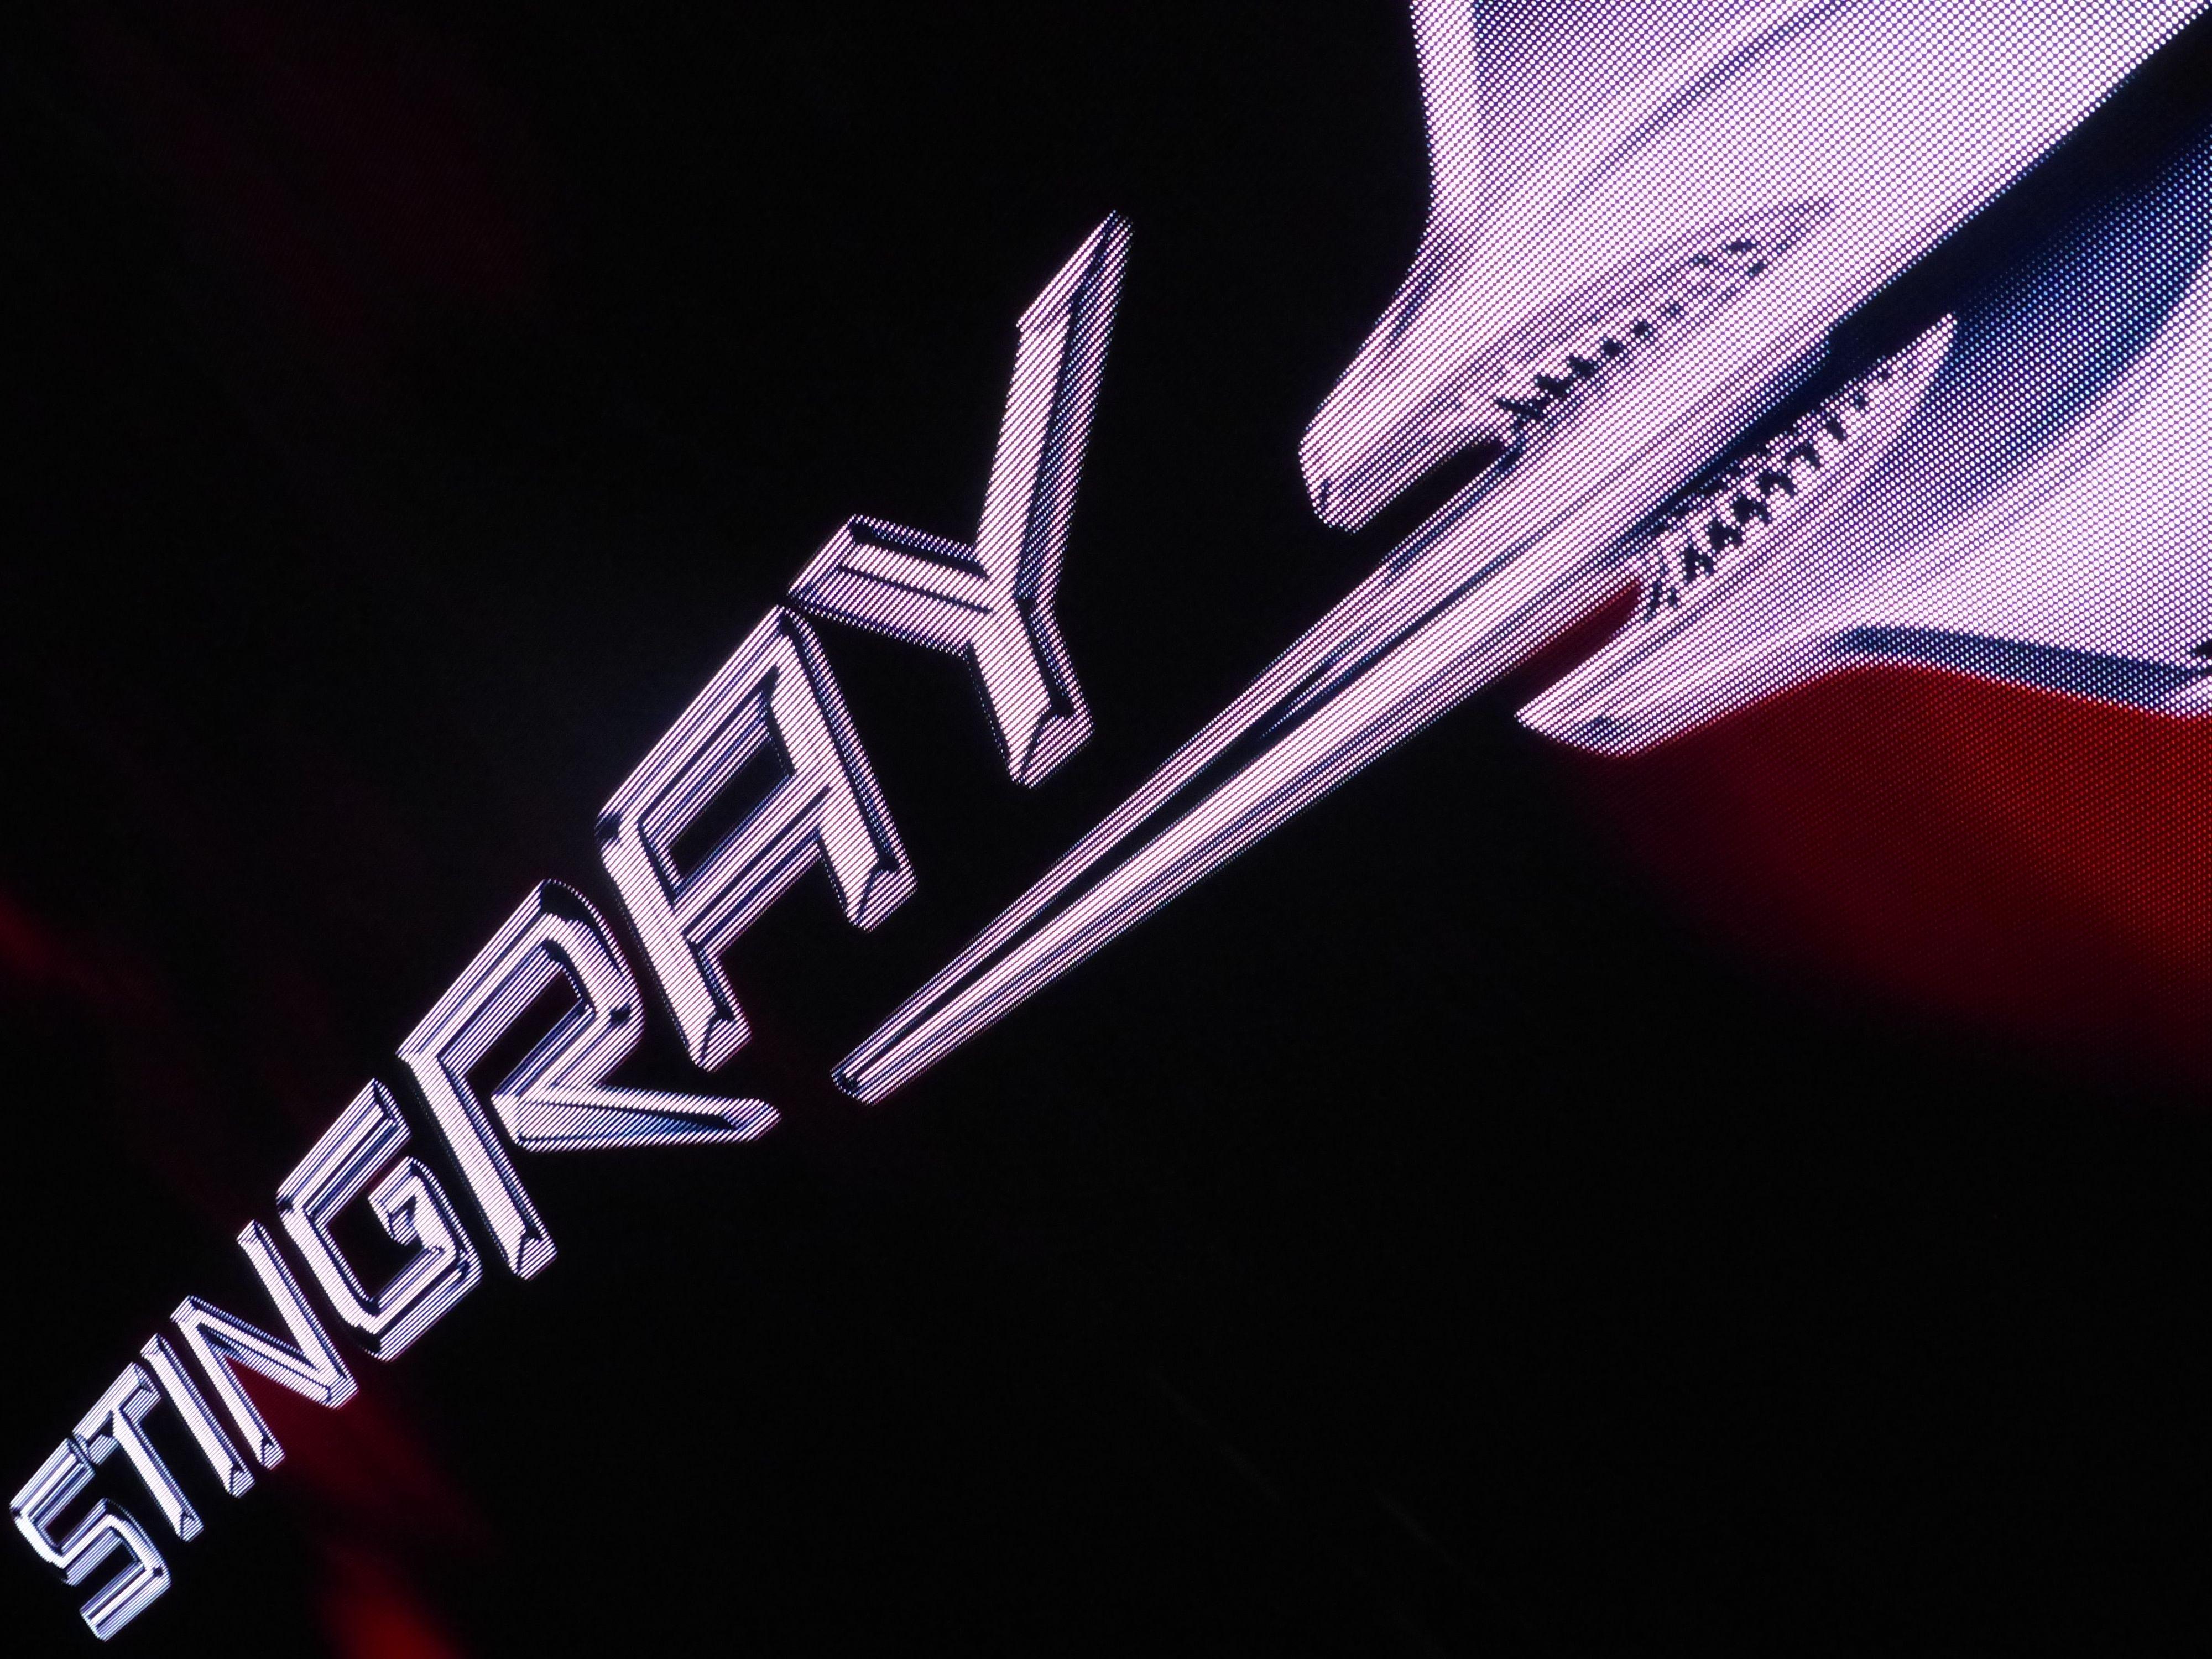 Corvette C7 Stingray Logo - Watch The 2014 Chevrolet C7 Corvette Stingray Detroit Auto Show Debut